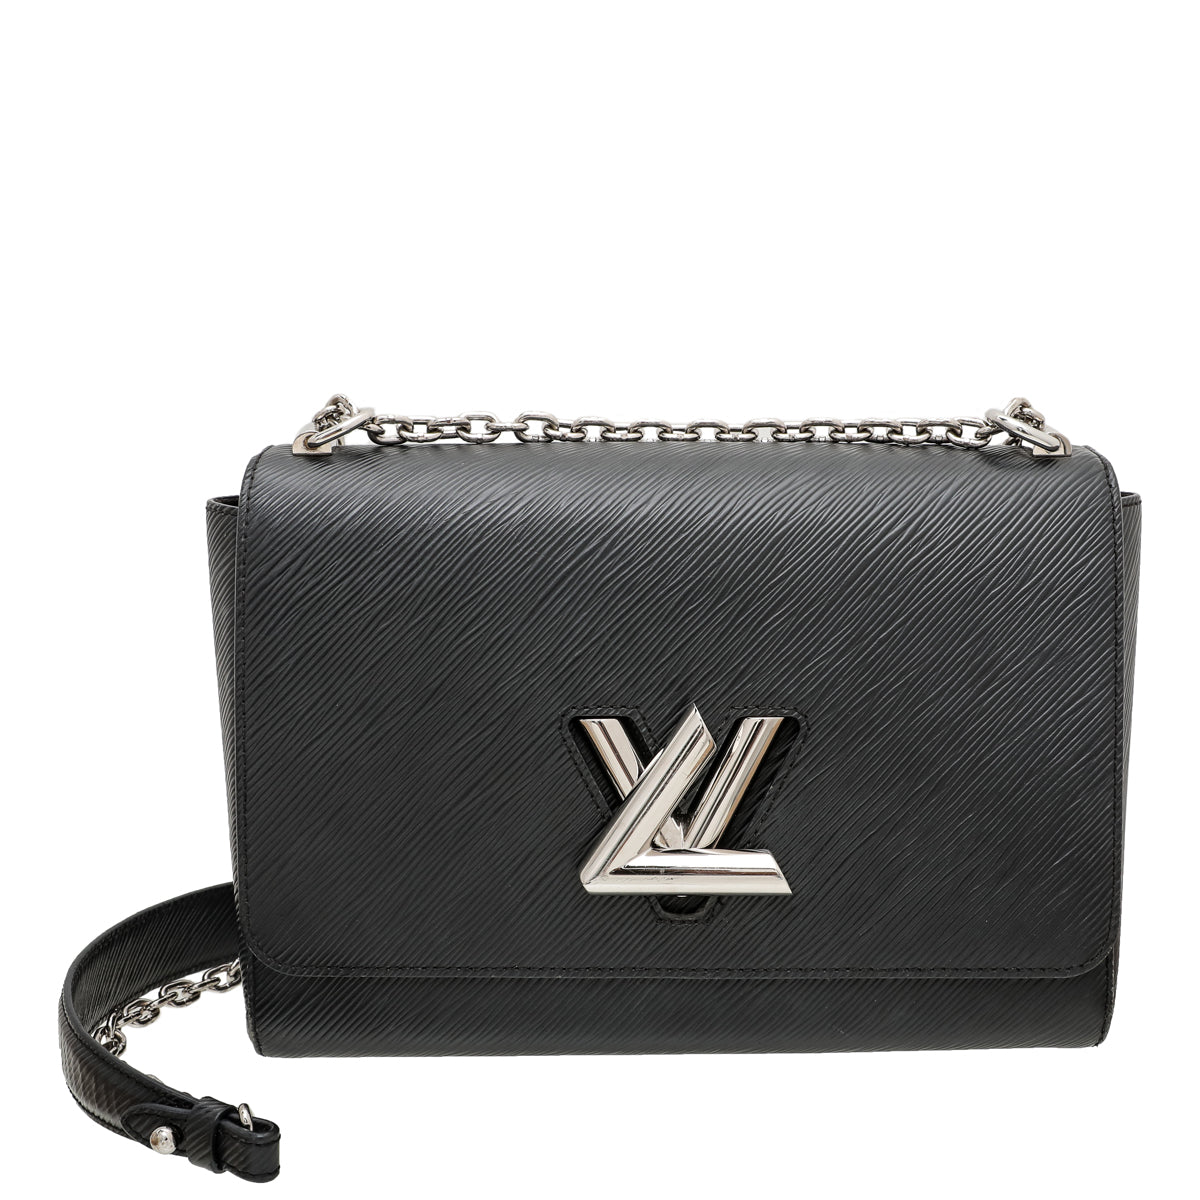 Louis Vuitton Twist GM Bag